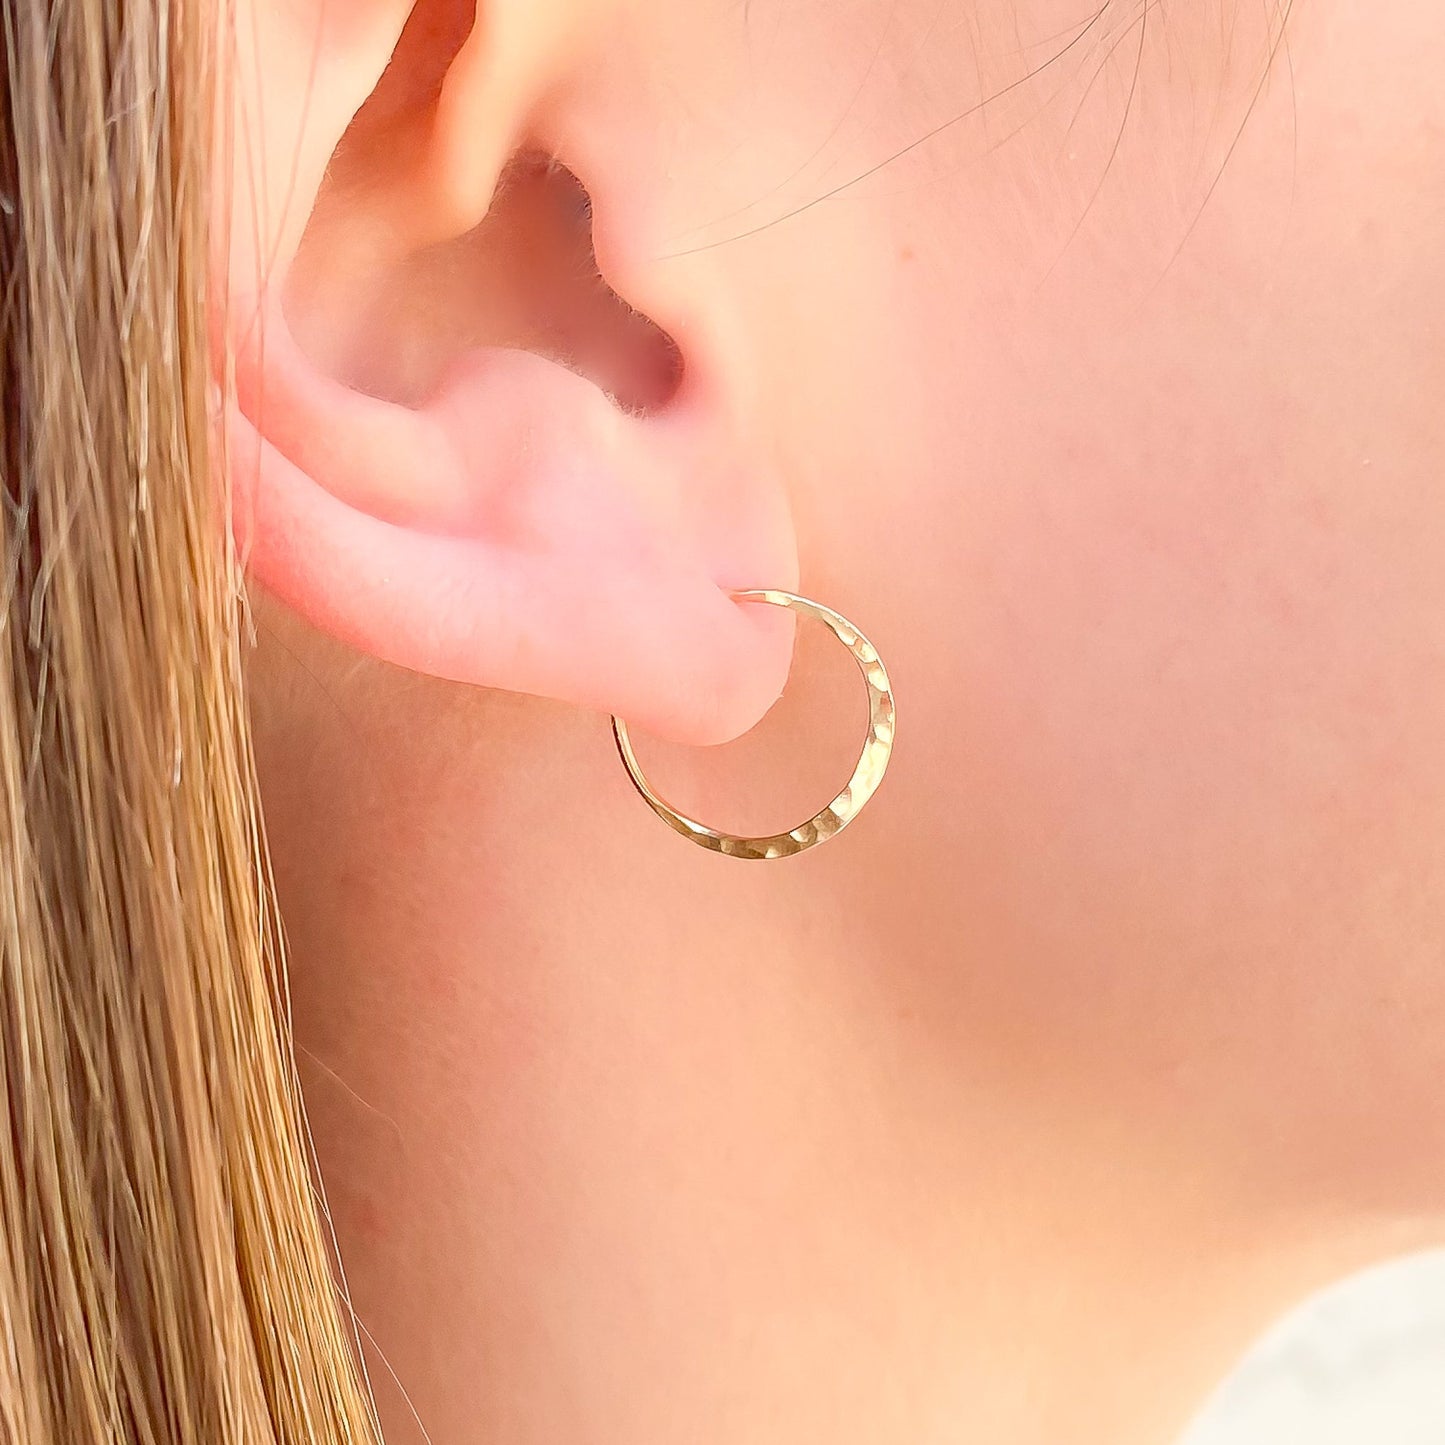 15mm Hammered Hoop Earrings, 14K Gold Filled